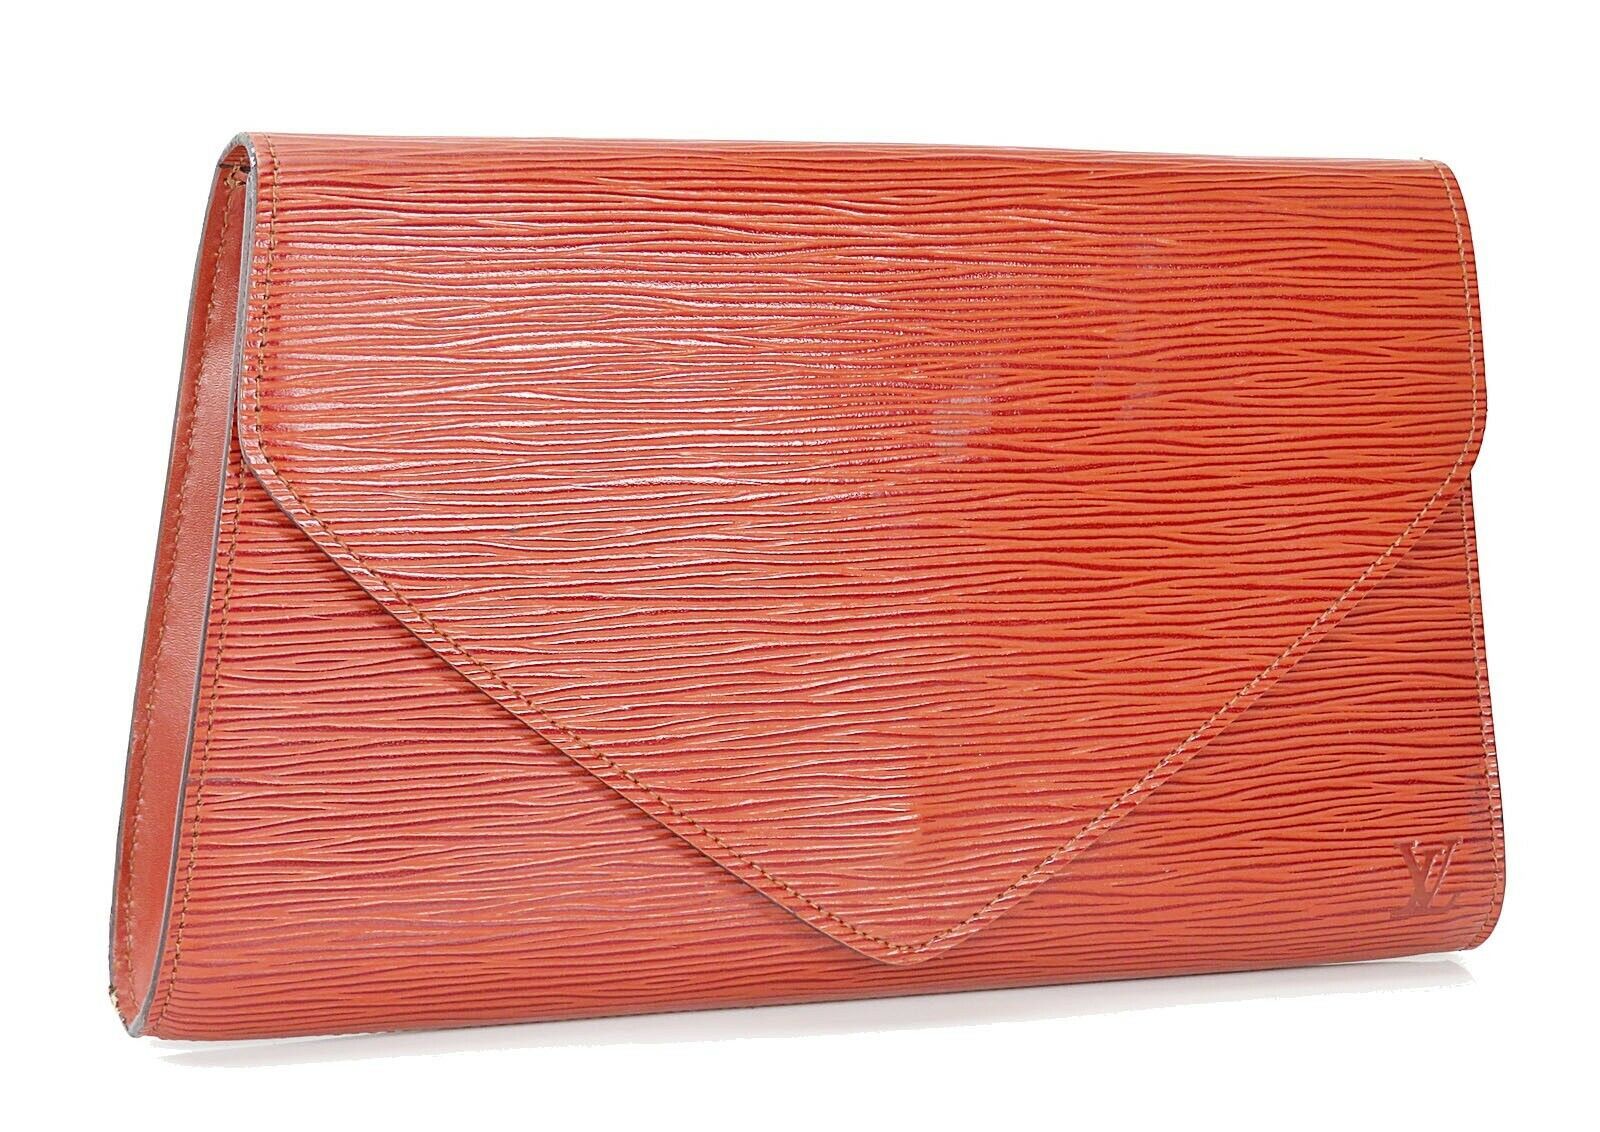 Authentic LOUIS VUITTON Art Deco Envelope Brown Epi Leather Clutch Bag #19151 - Backpacks, Bags ...